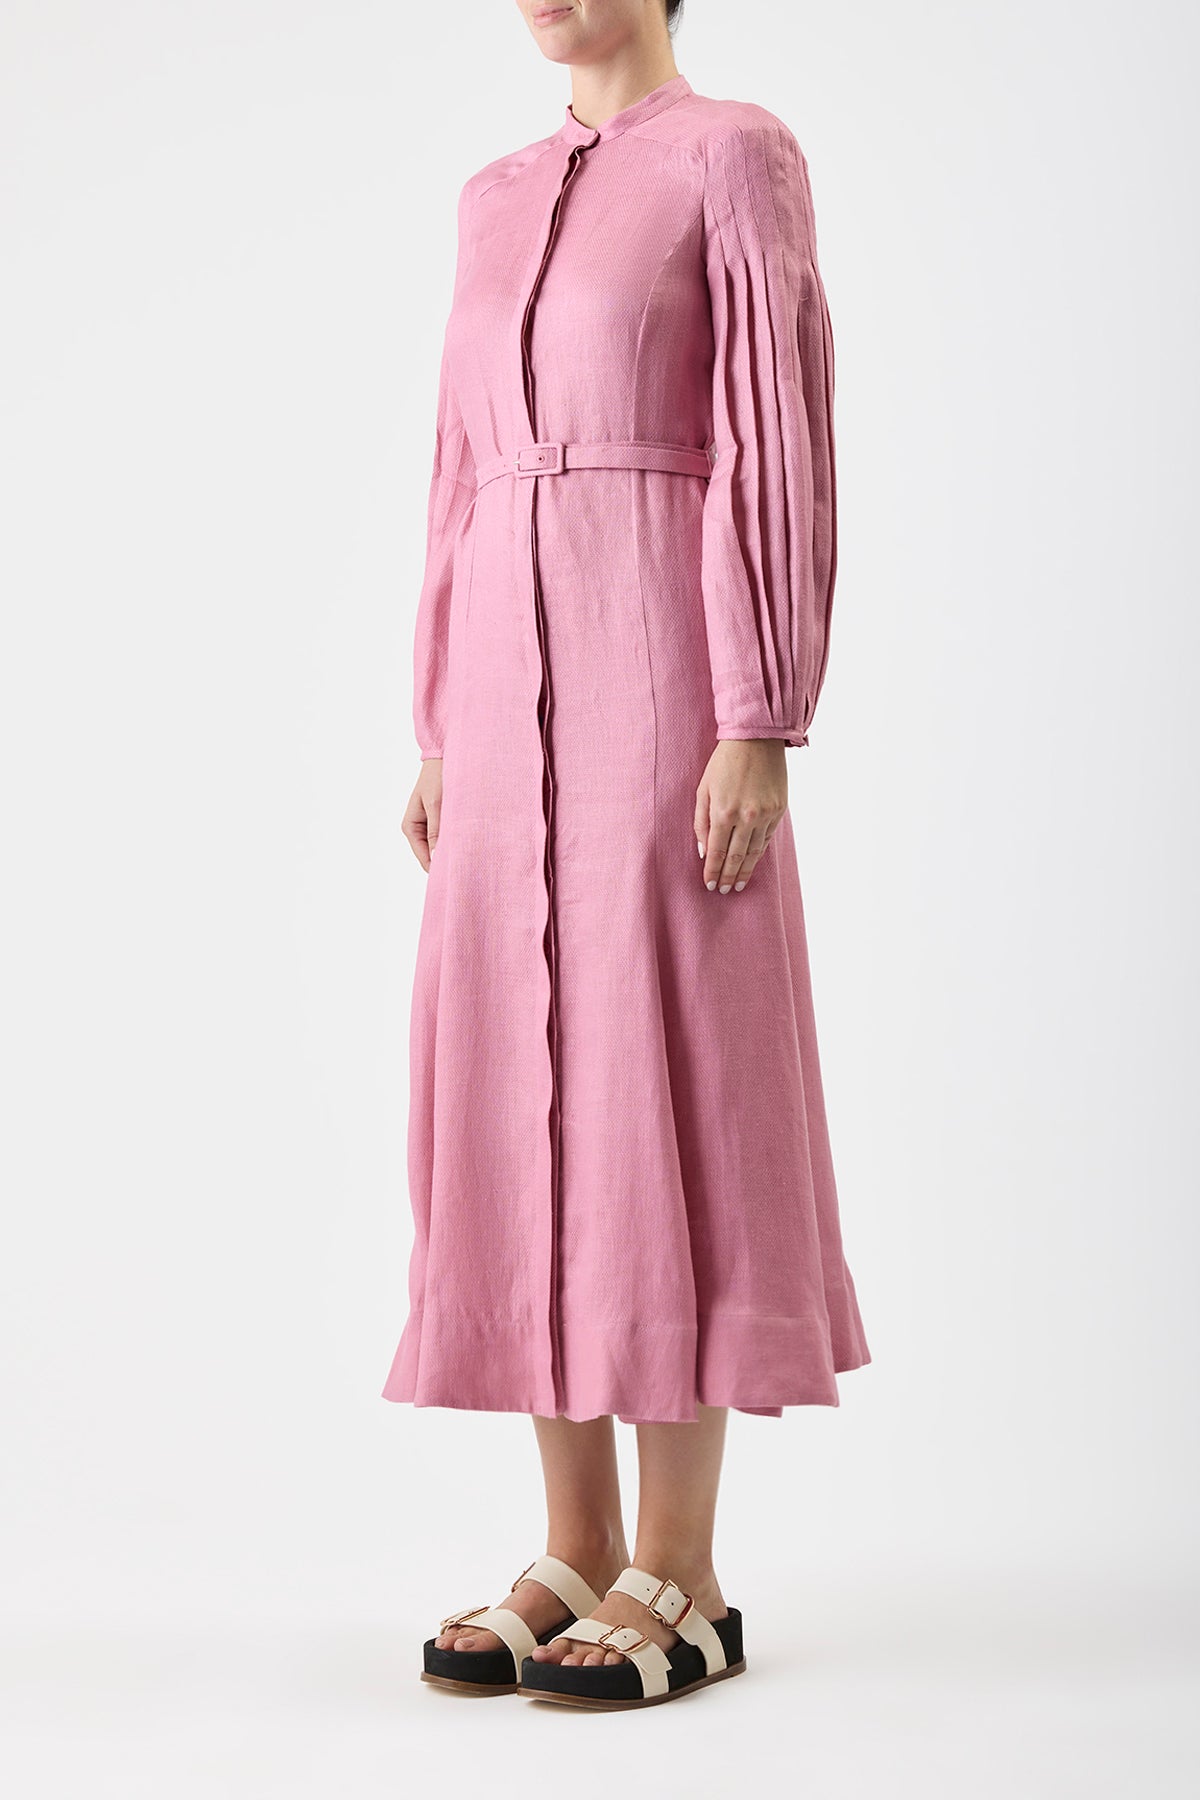 Lydia Dress with Slip in Rose Quartz Linen